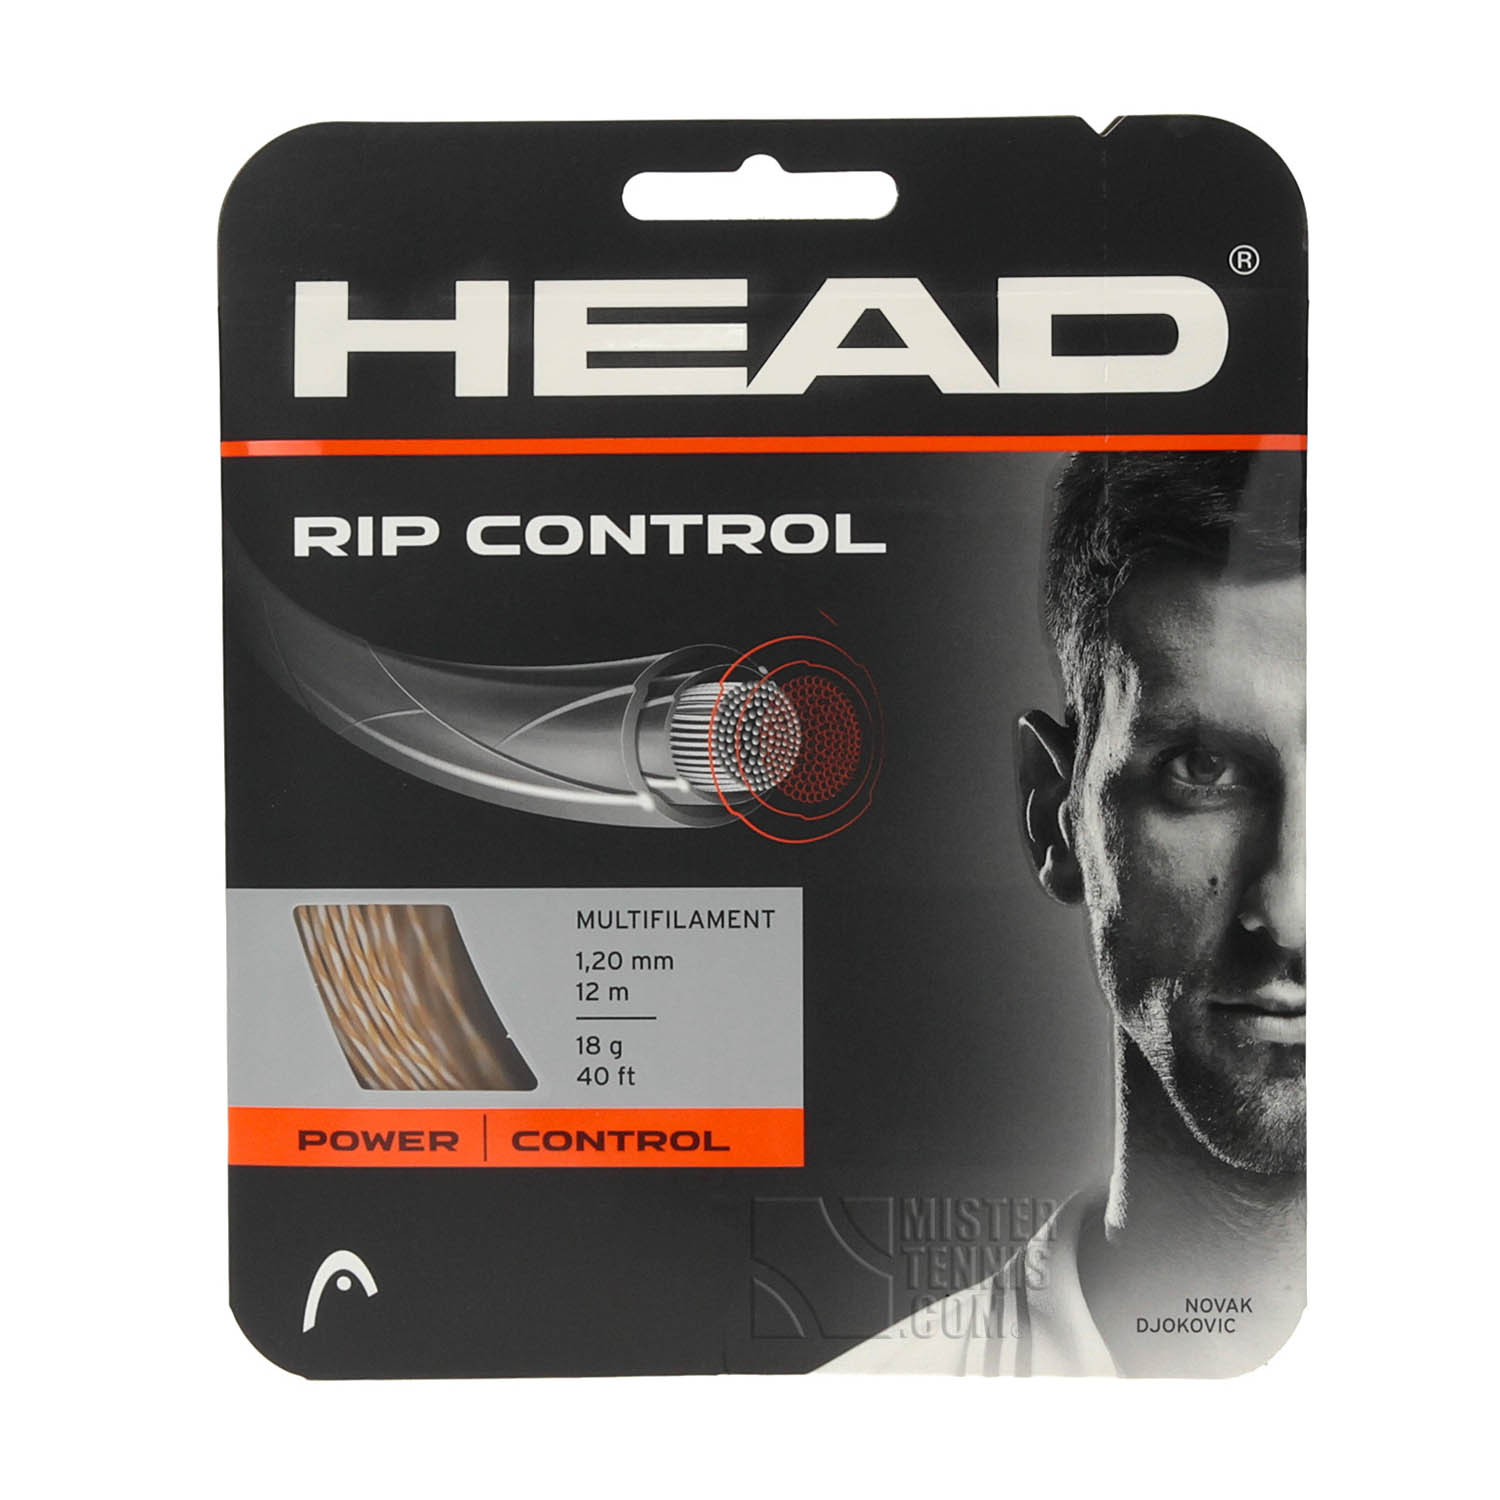 Head Rip Control 1.20 12 m Set - Natural/White